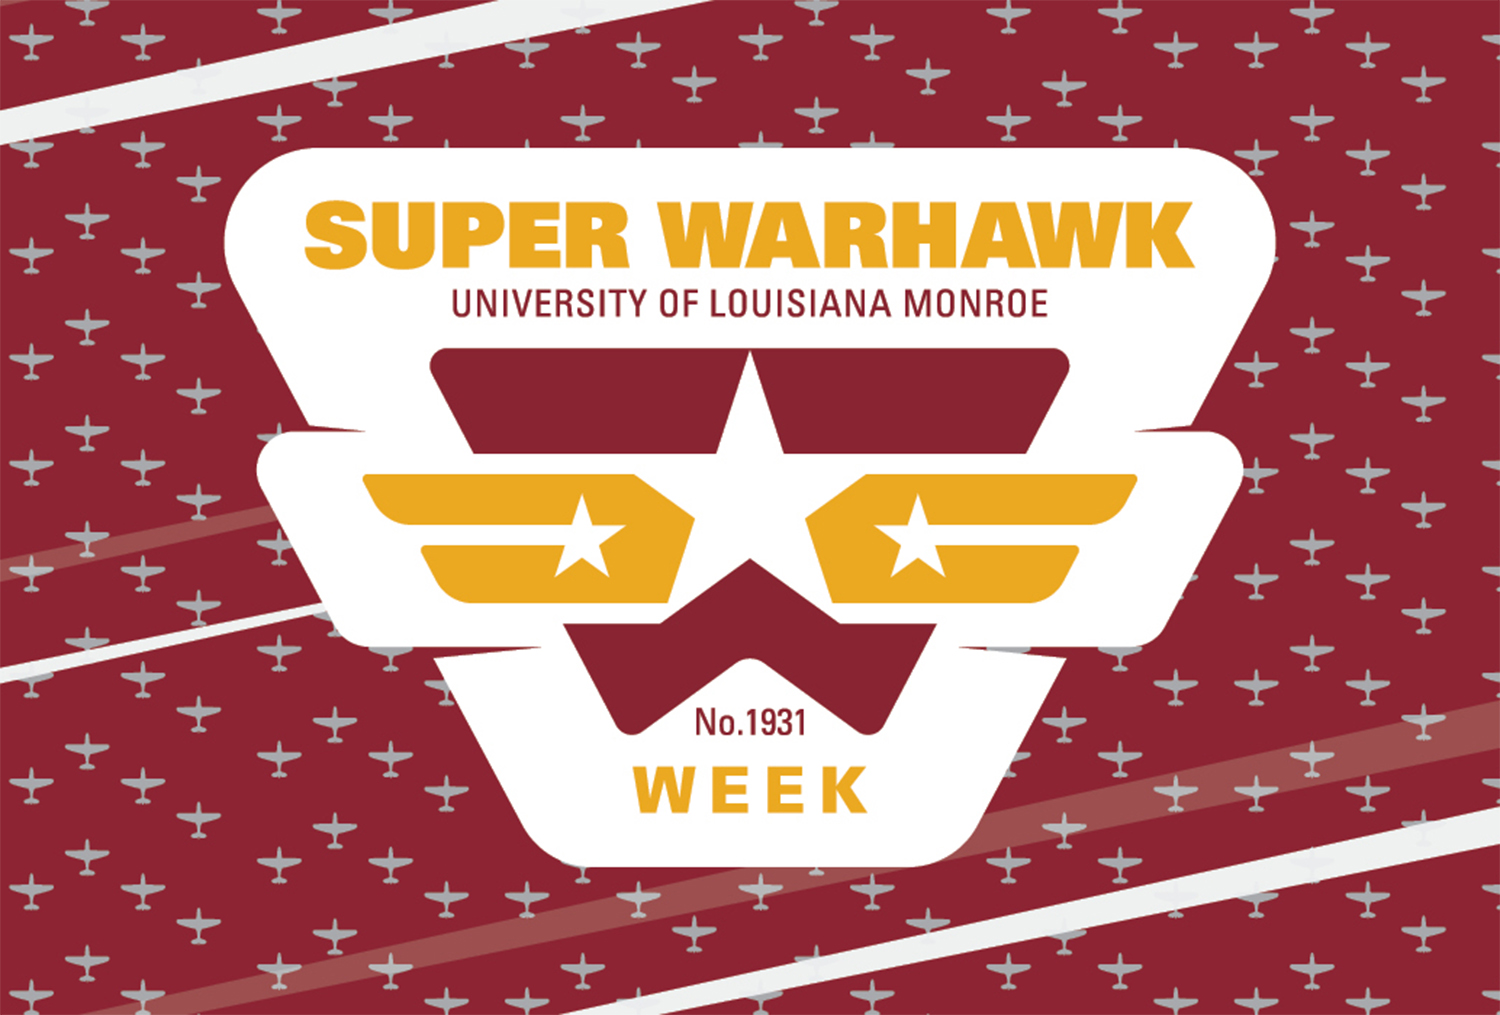 Super Warhawk Week